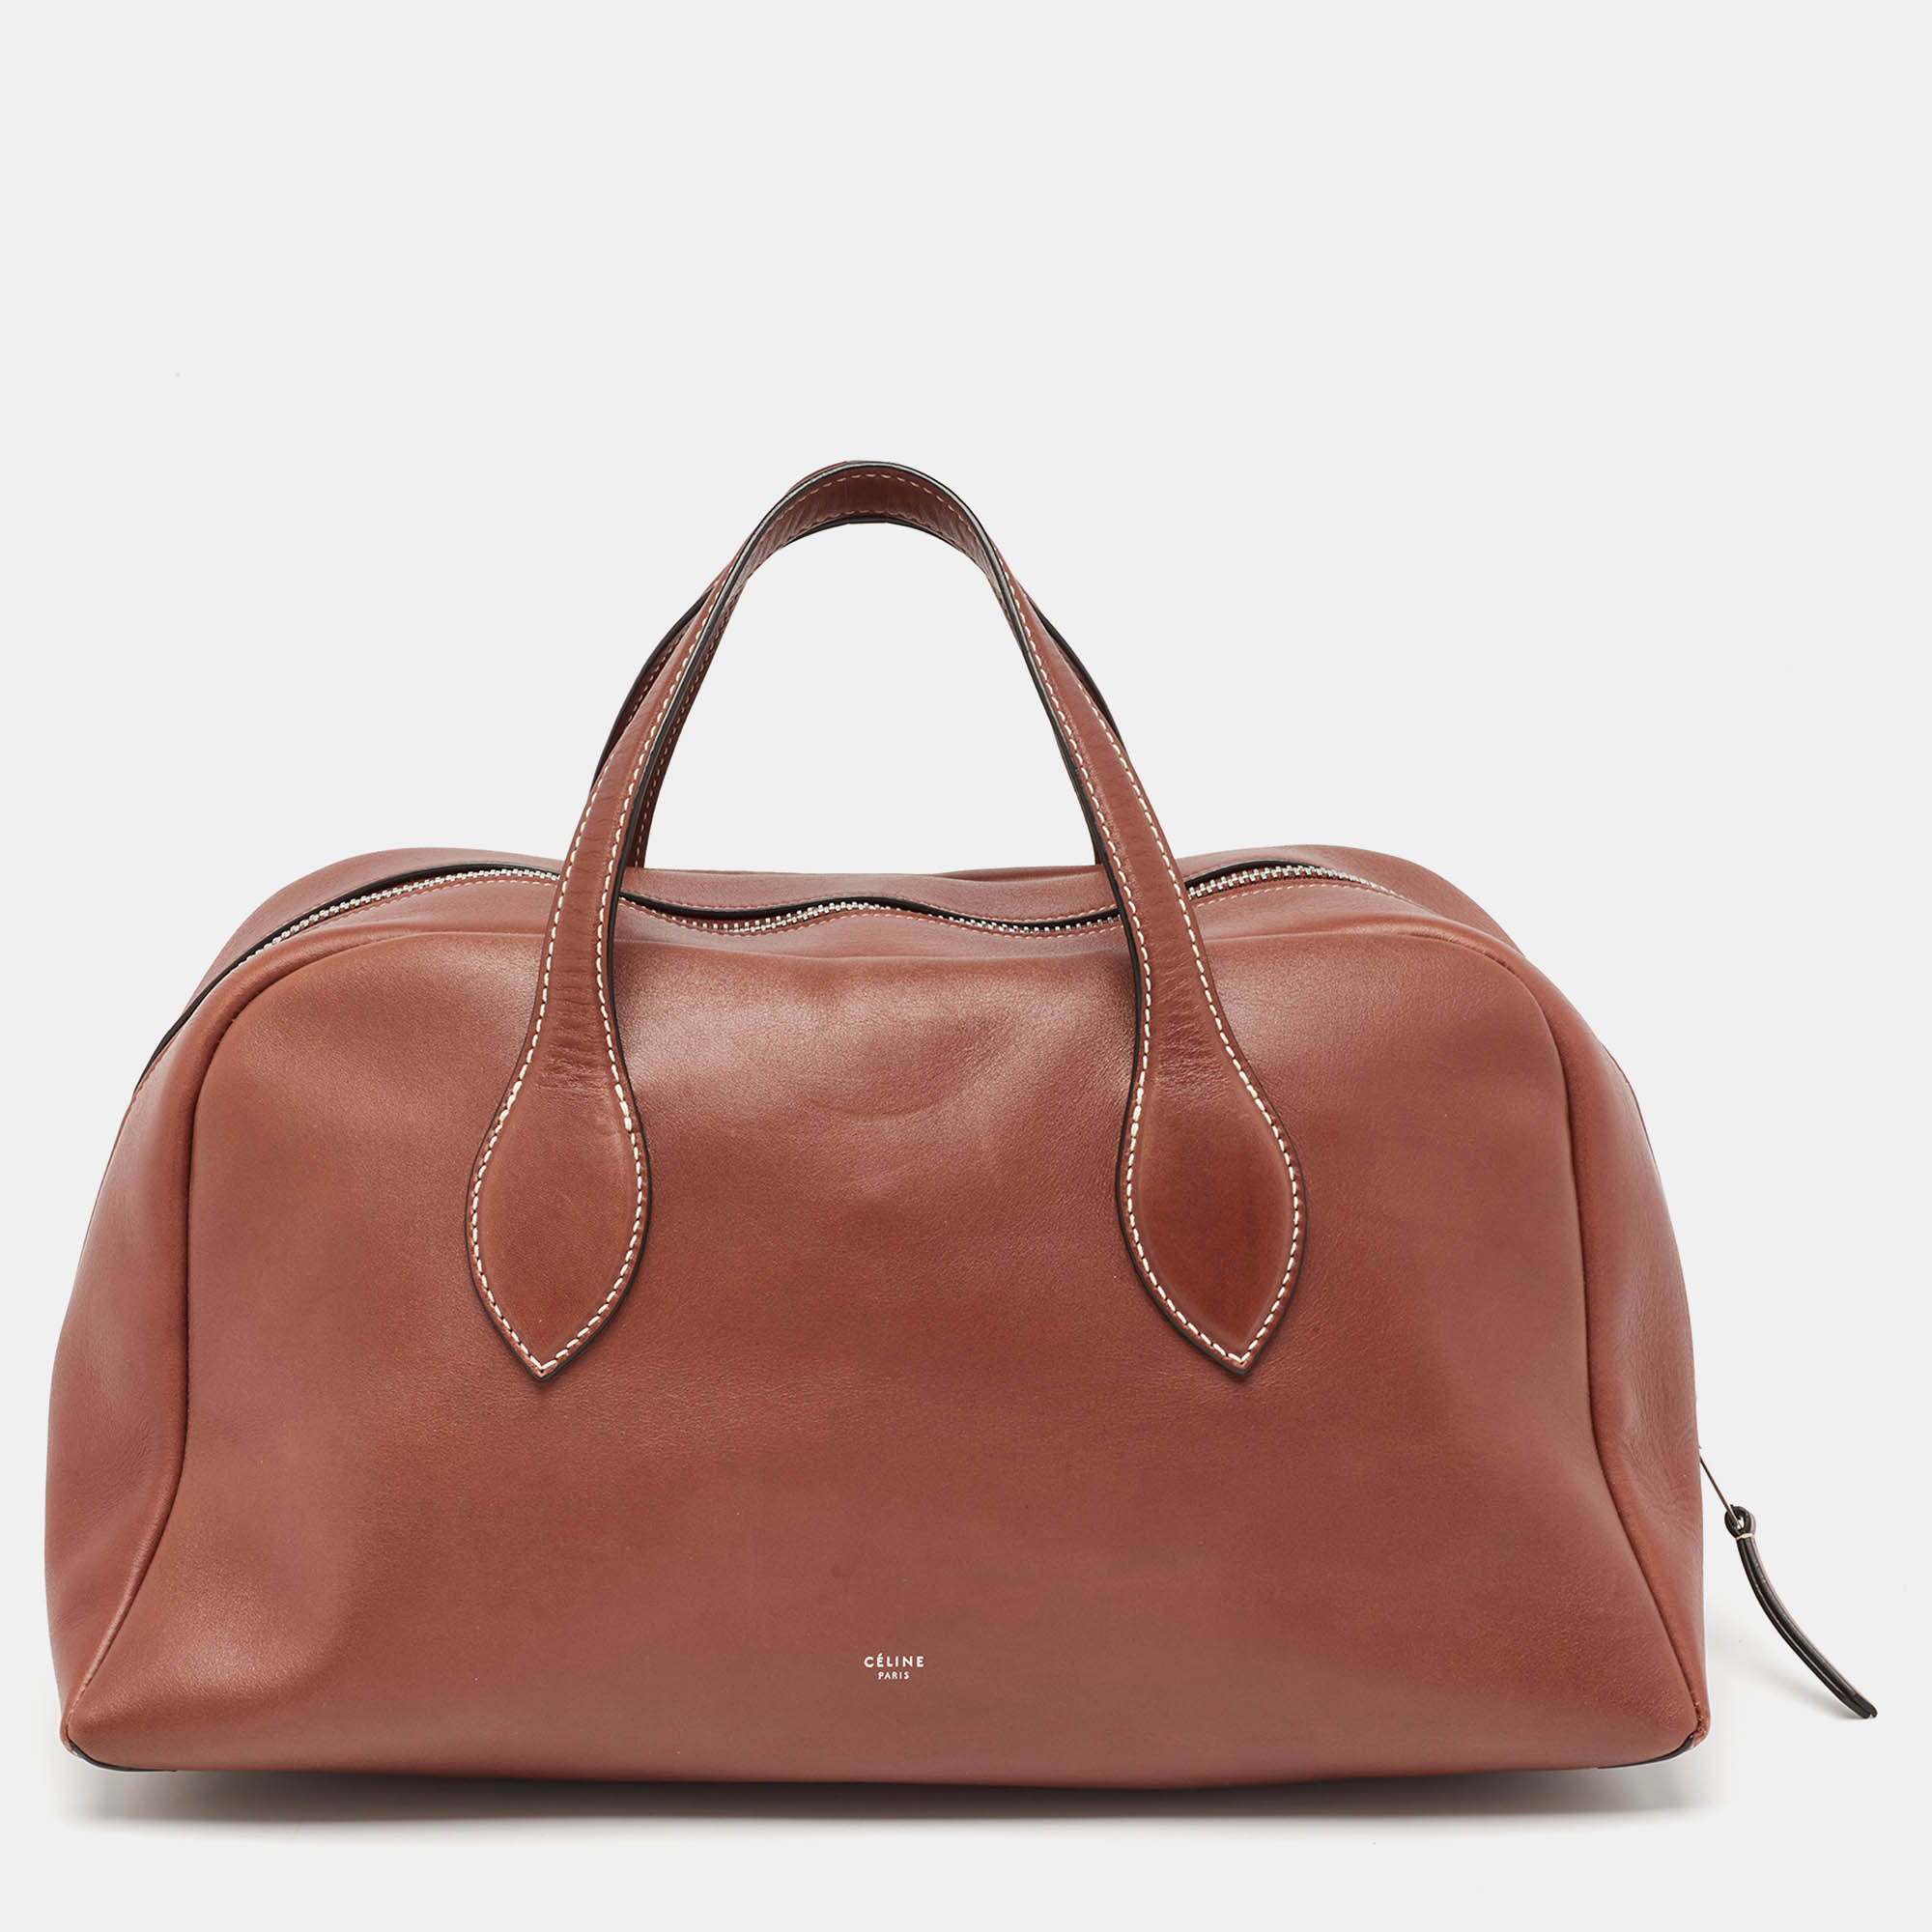 Celine brown leather medium bowling bag